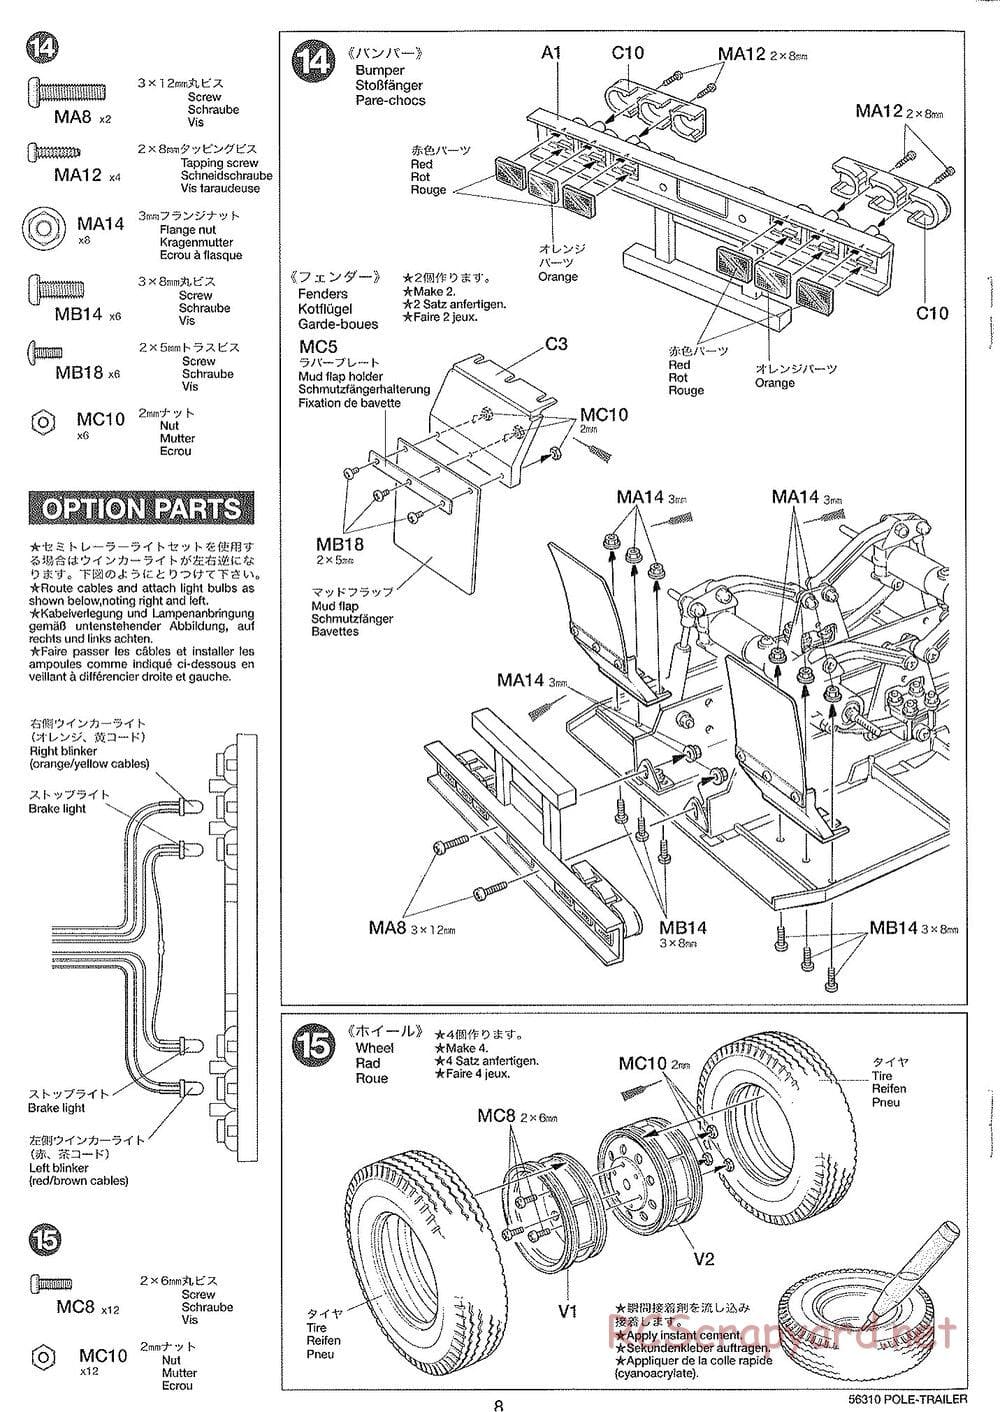 Tamiya - Semi Pole Trailer Chassis - Manual - Page 8